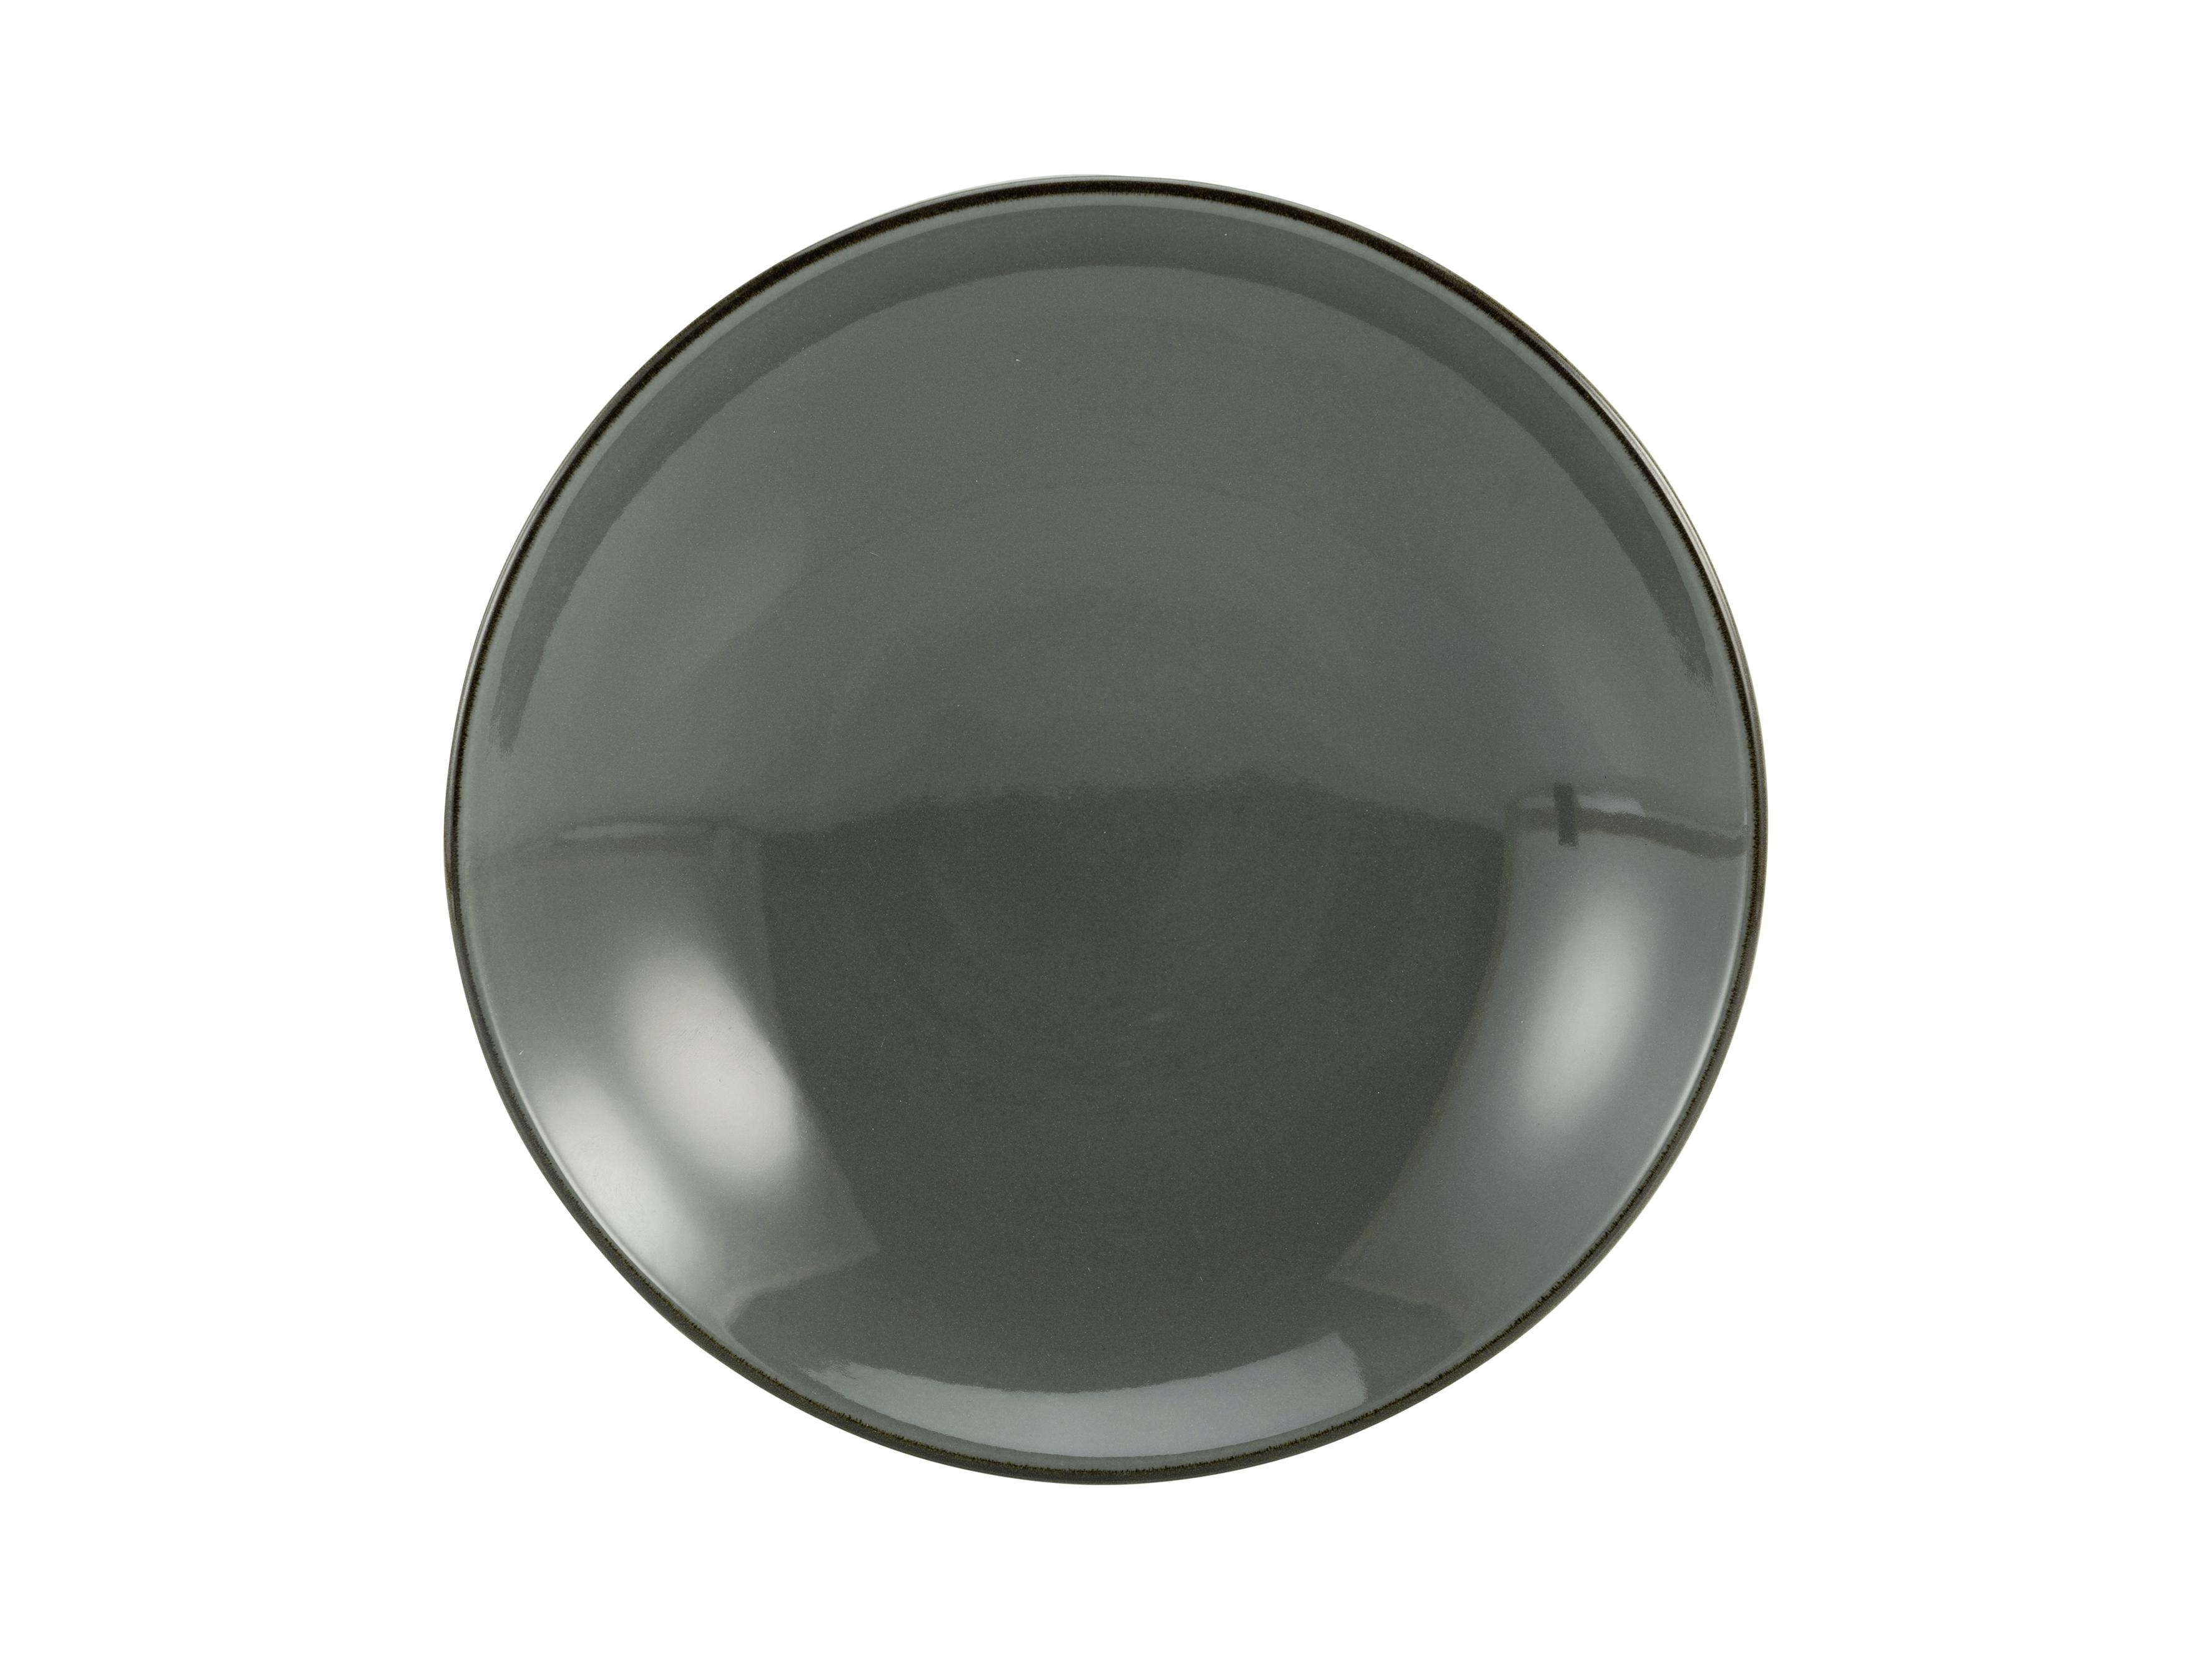 TANJUR DUBOKI LINEN - antracit, keramika (22/4cm) - Premium Living